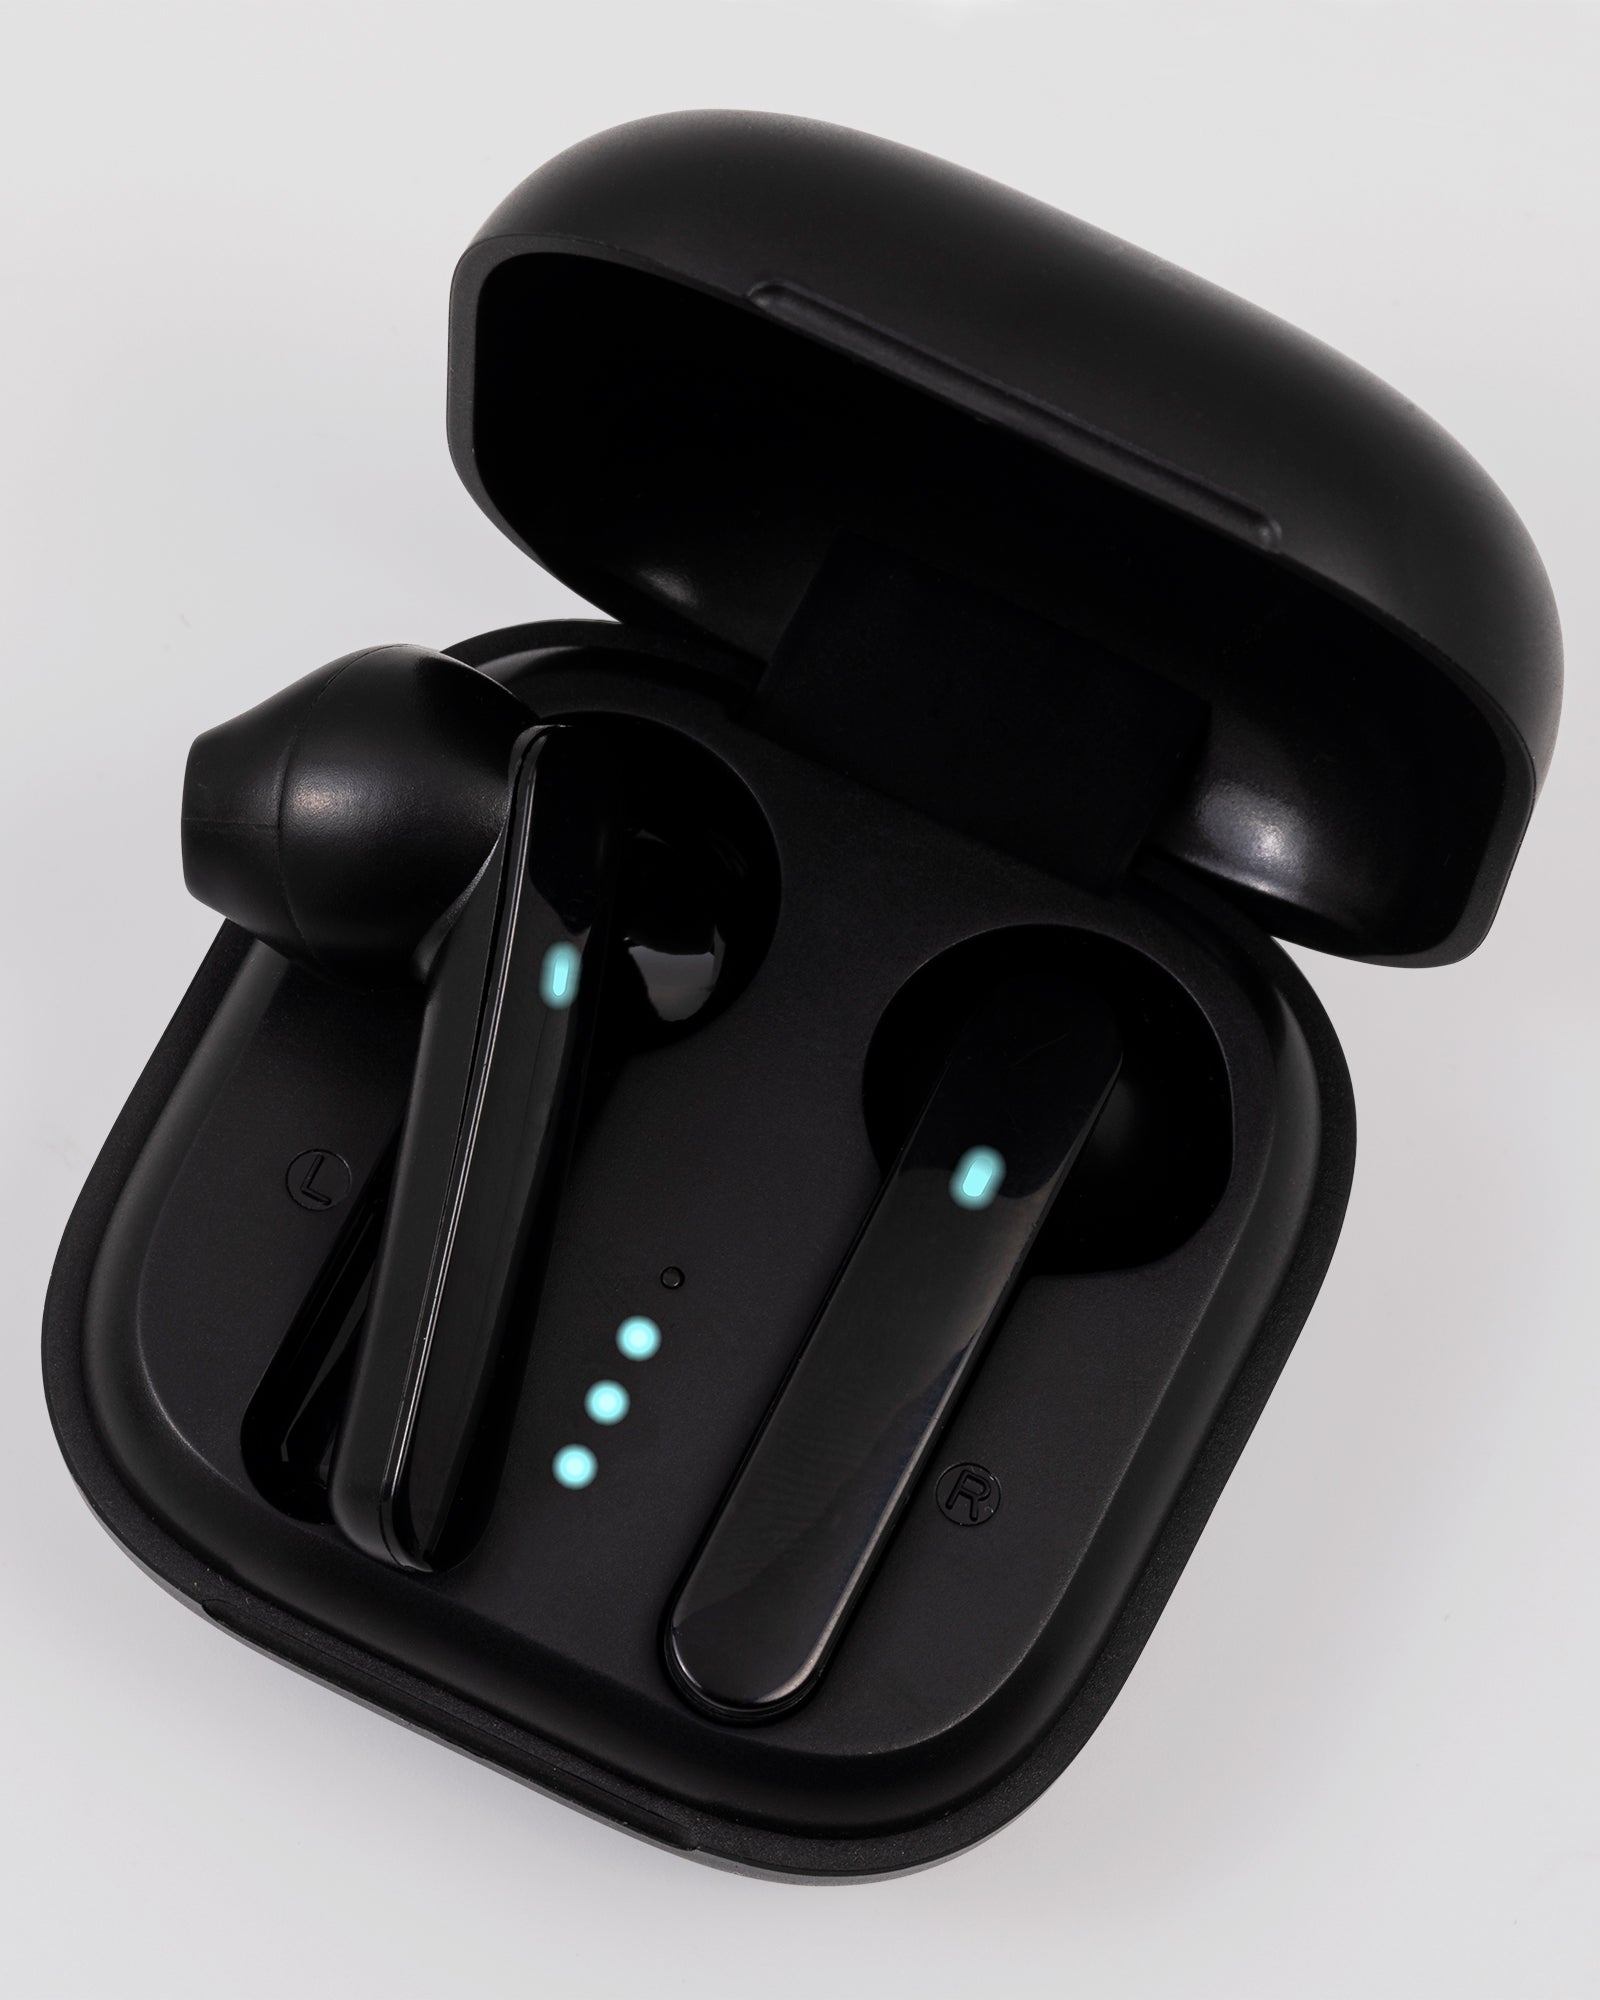 Xiaomi Mi AirDots Headphones for Sale, Shop New & Used Headphones